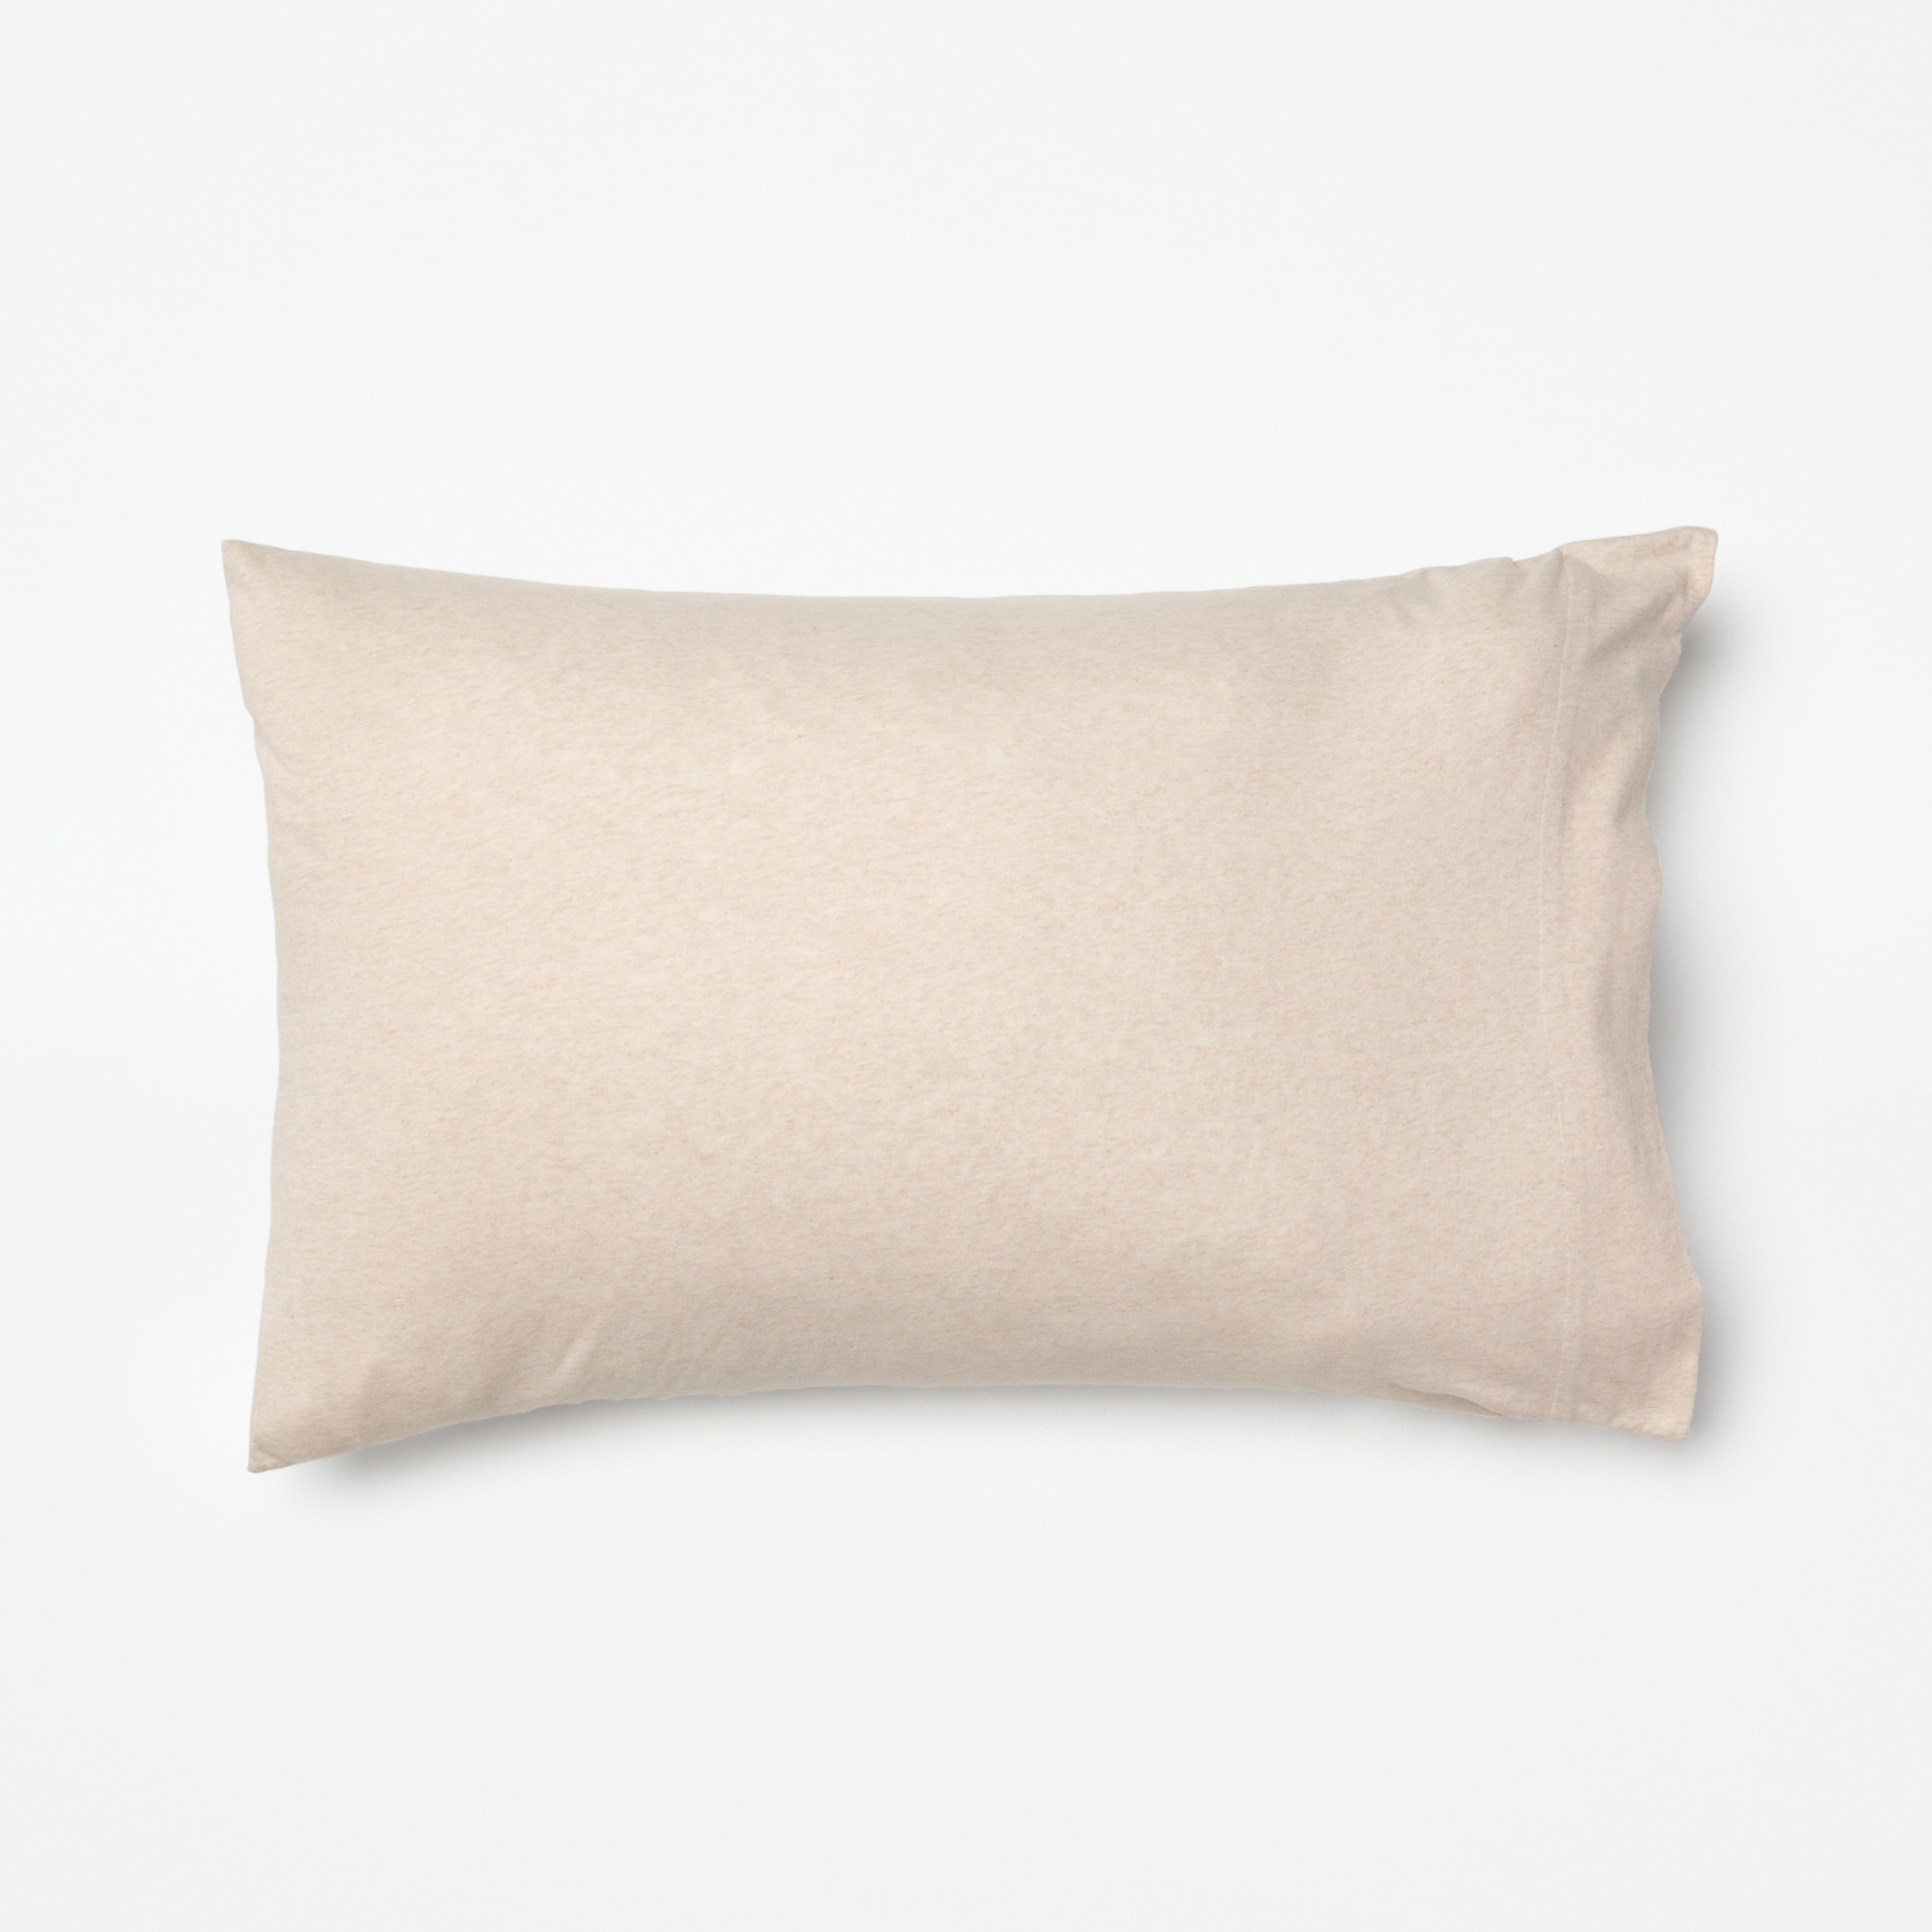 Linenwalas Todays Deal Pillow Cases 100 % Organic Softest Moisture Wicking 